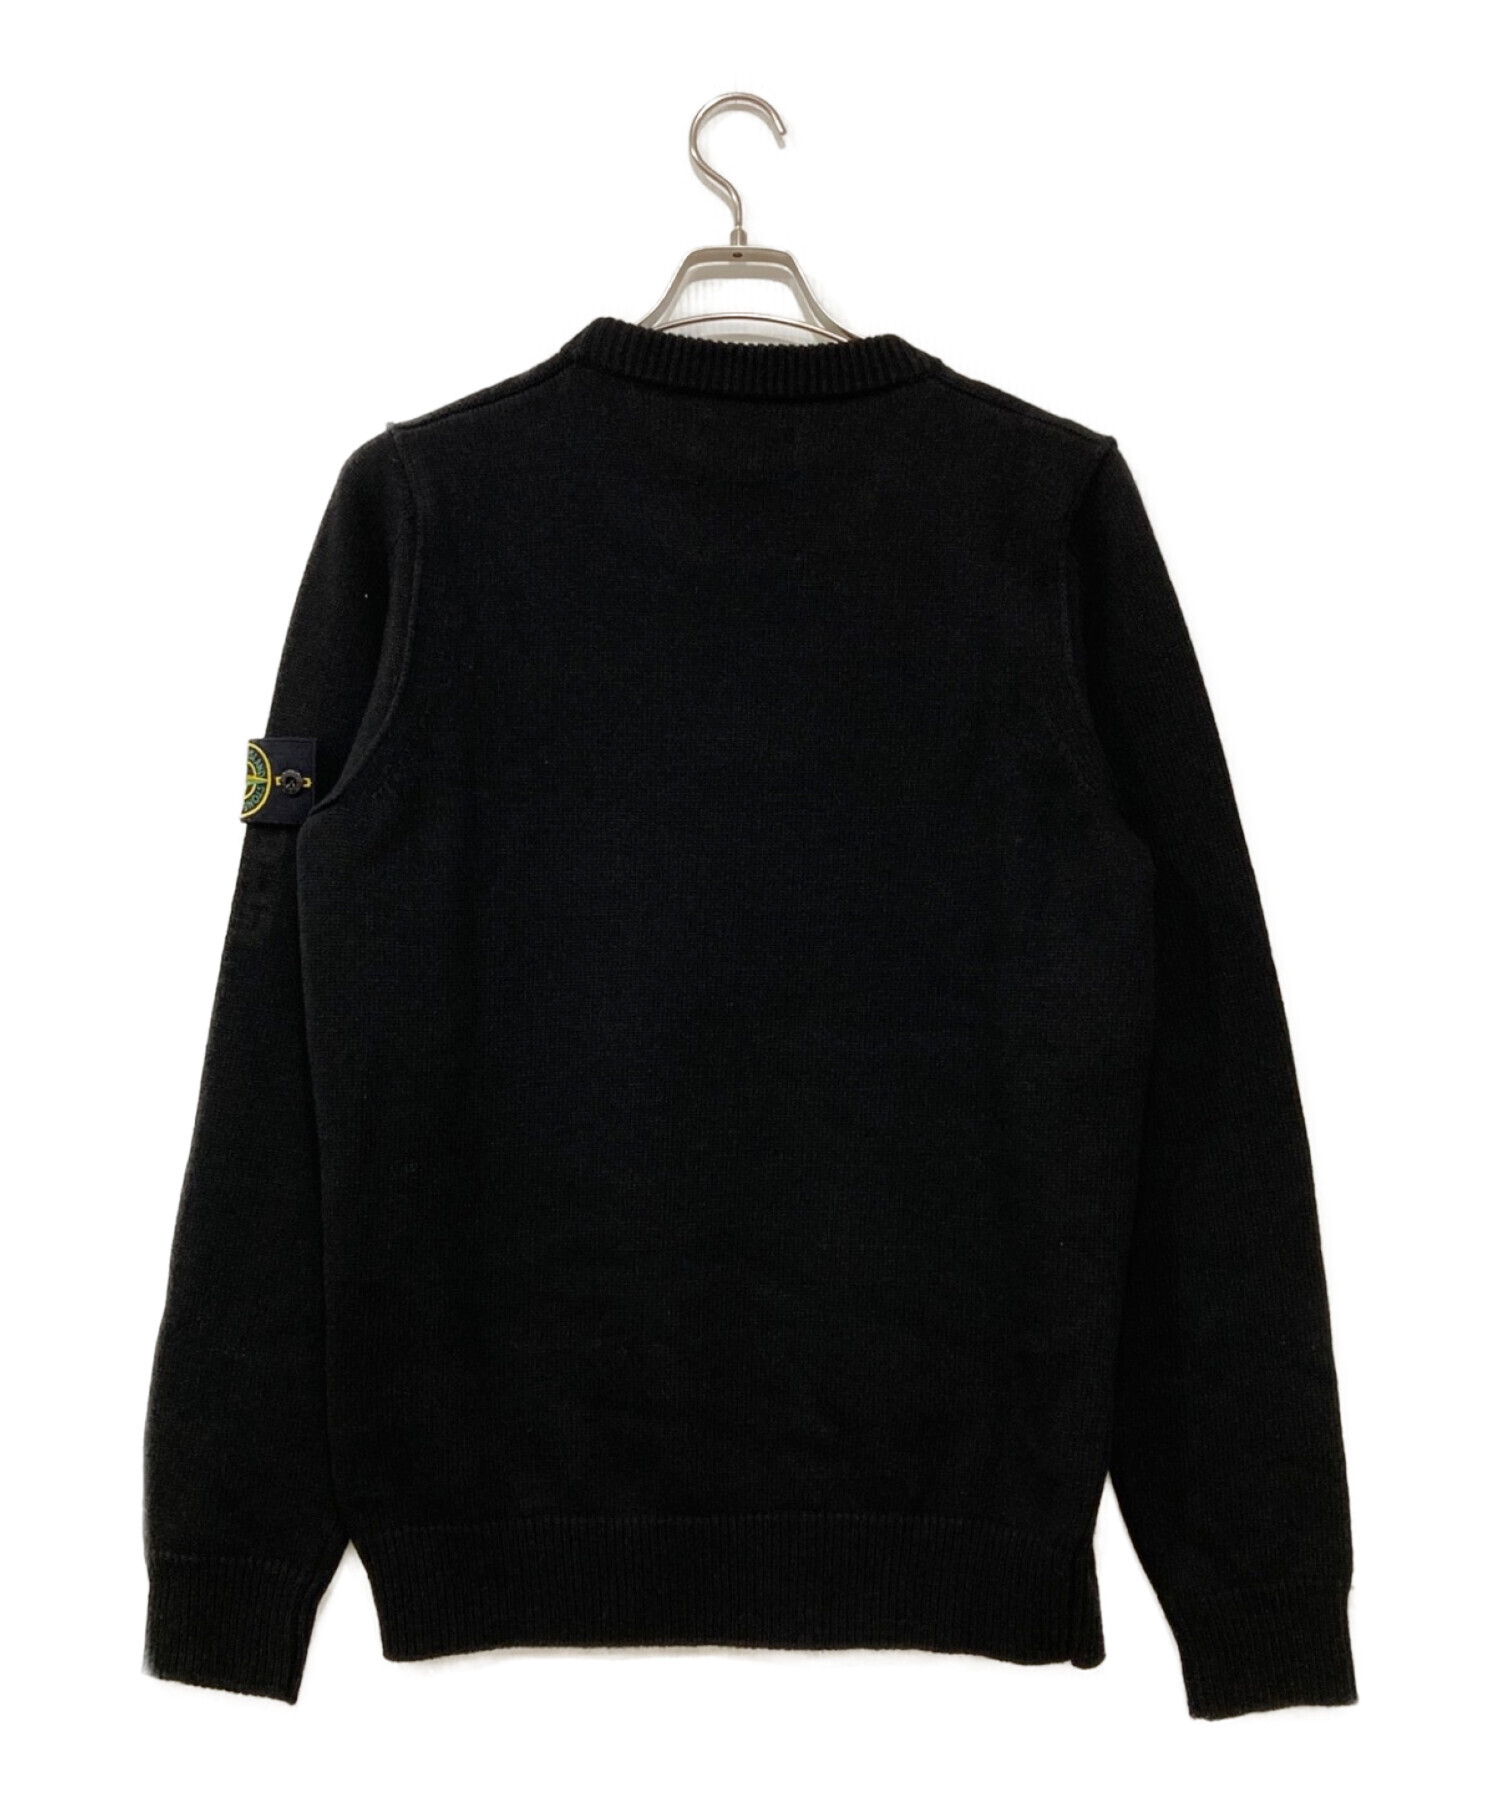 STONE ISLAND (ストーンアイランド) DSM Men's Sweater ブラック サイズ:M